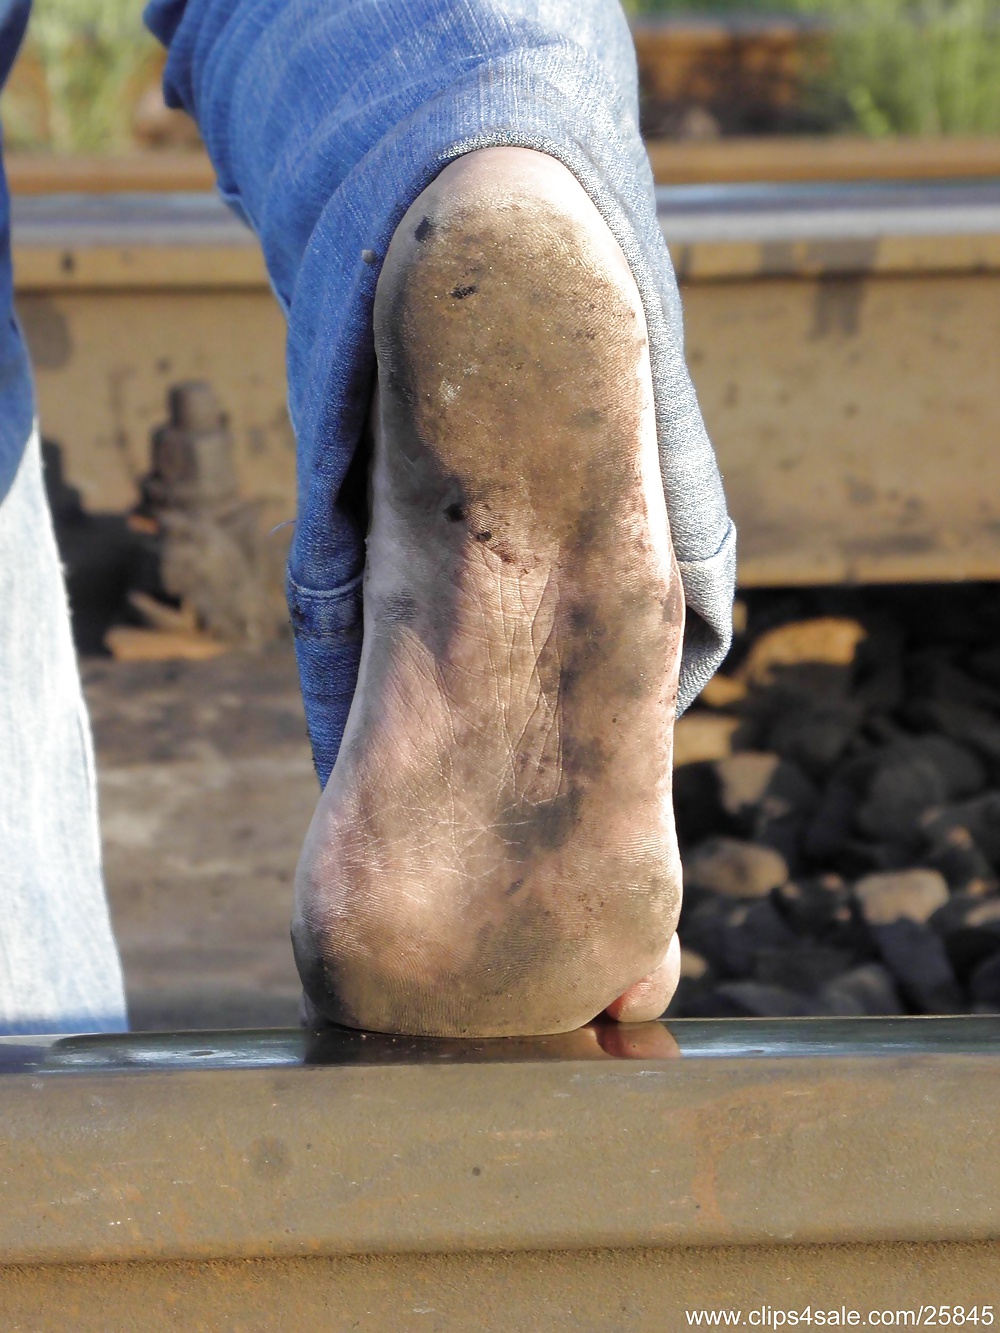 Sex Railway dirty feet image